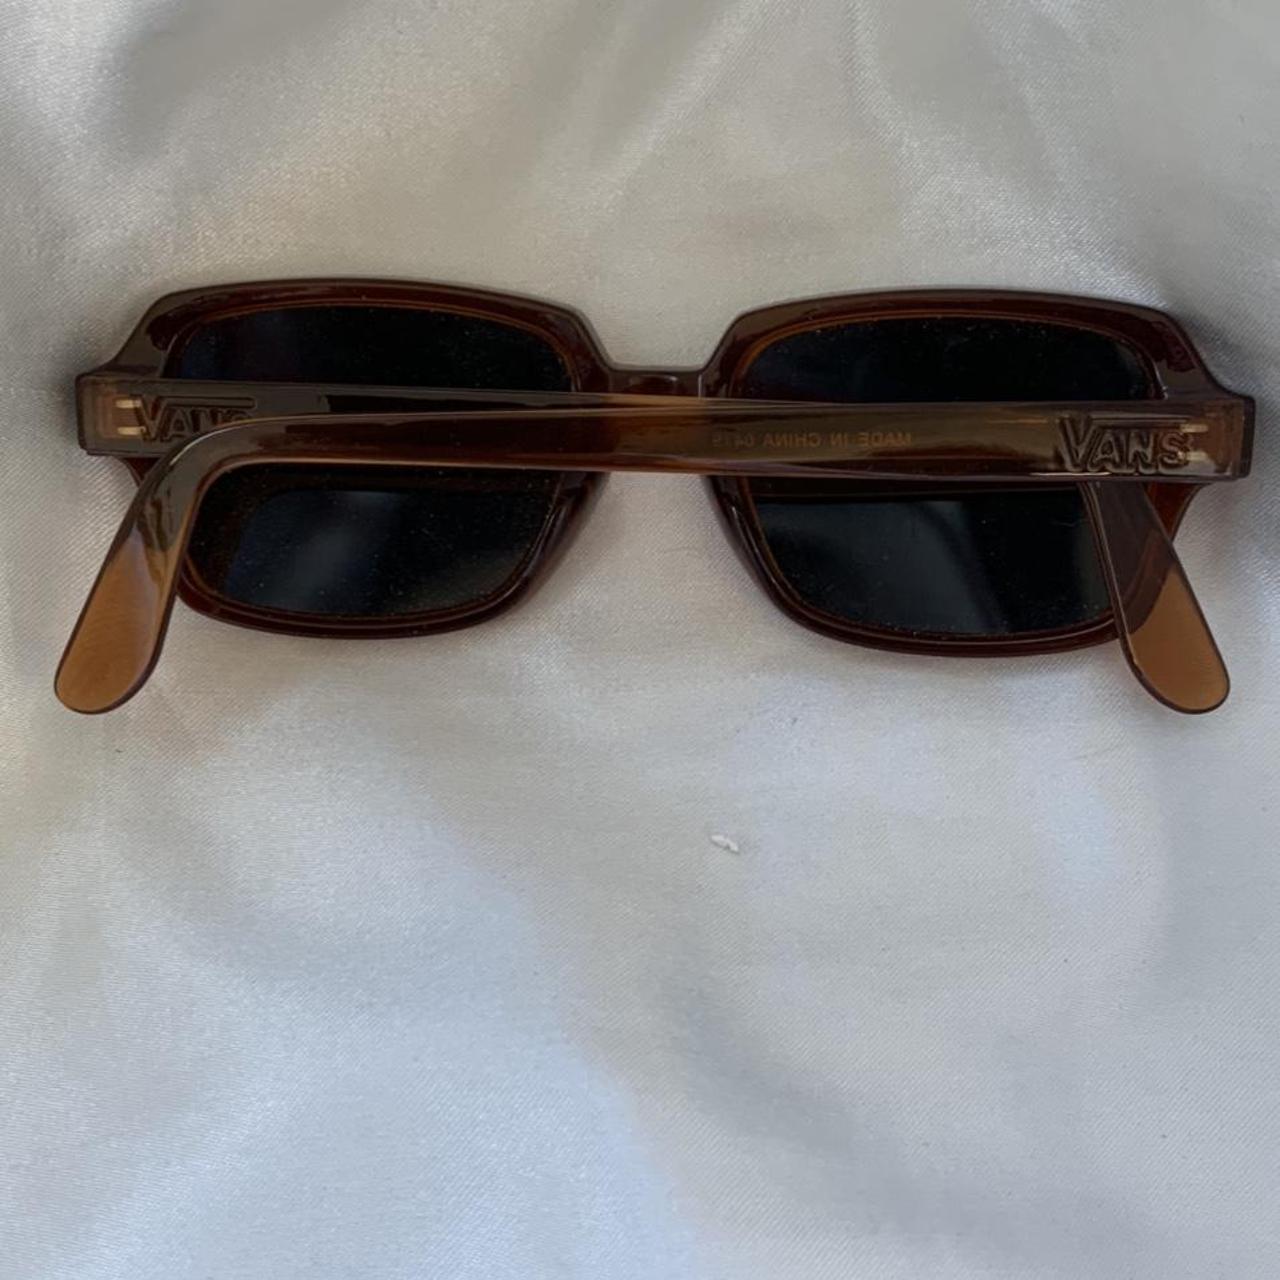 Product Image 2 - Vans sunglasses